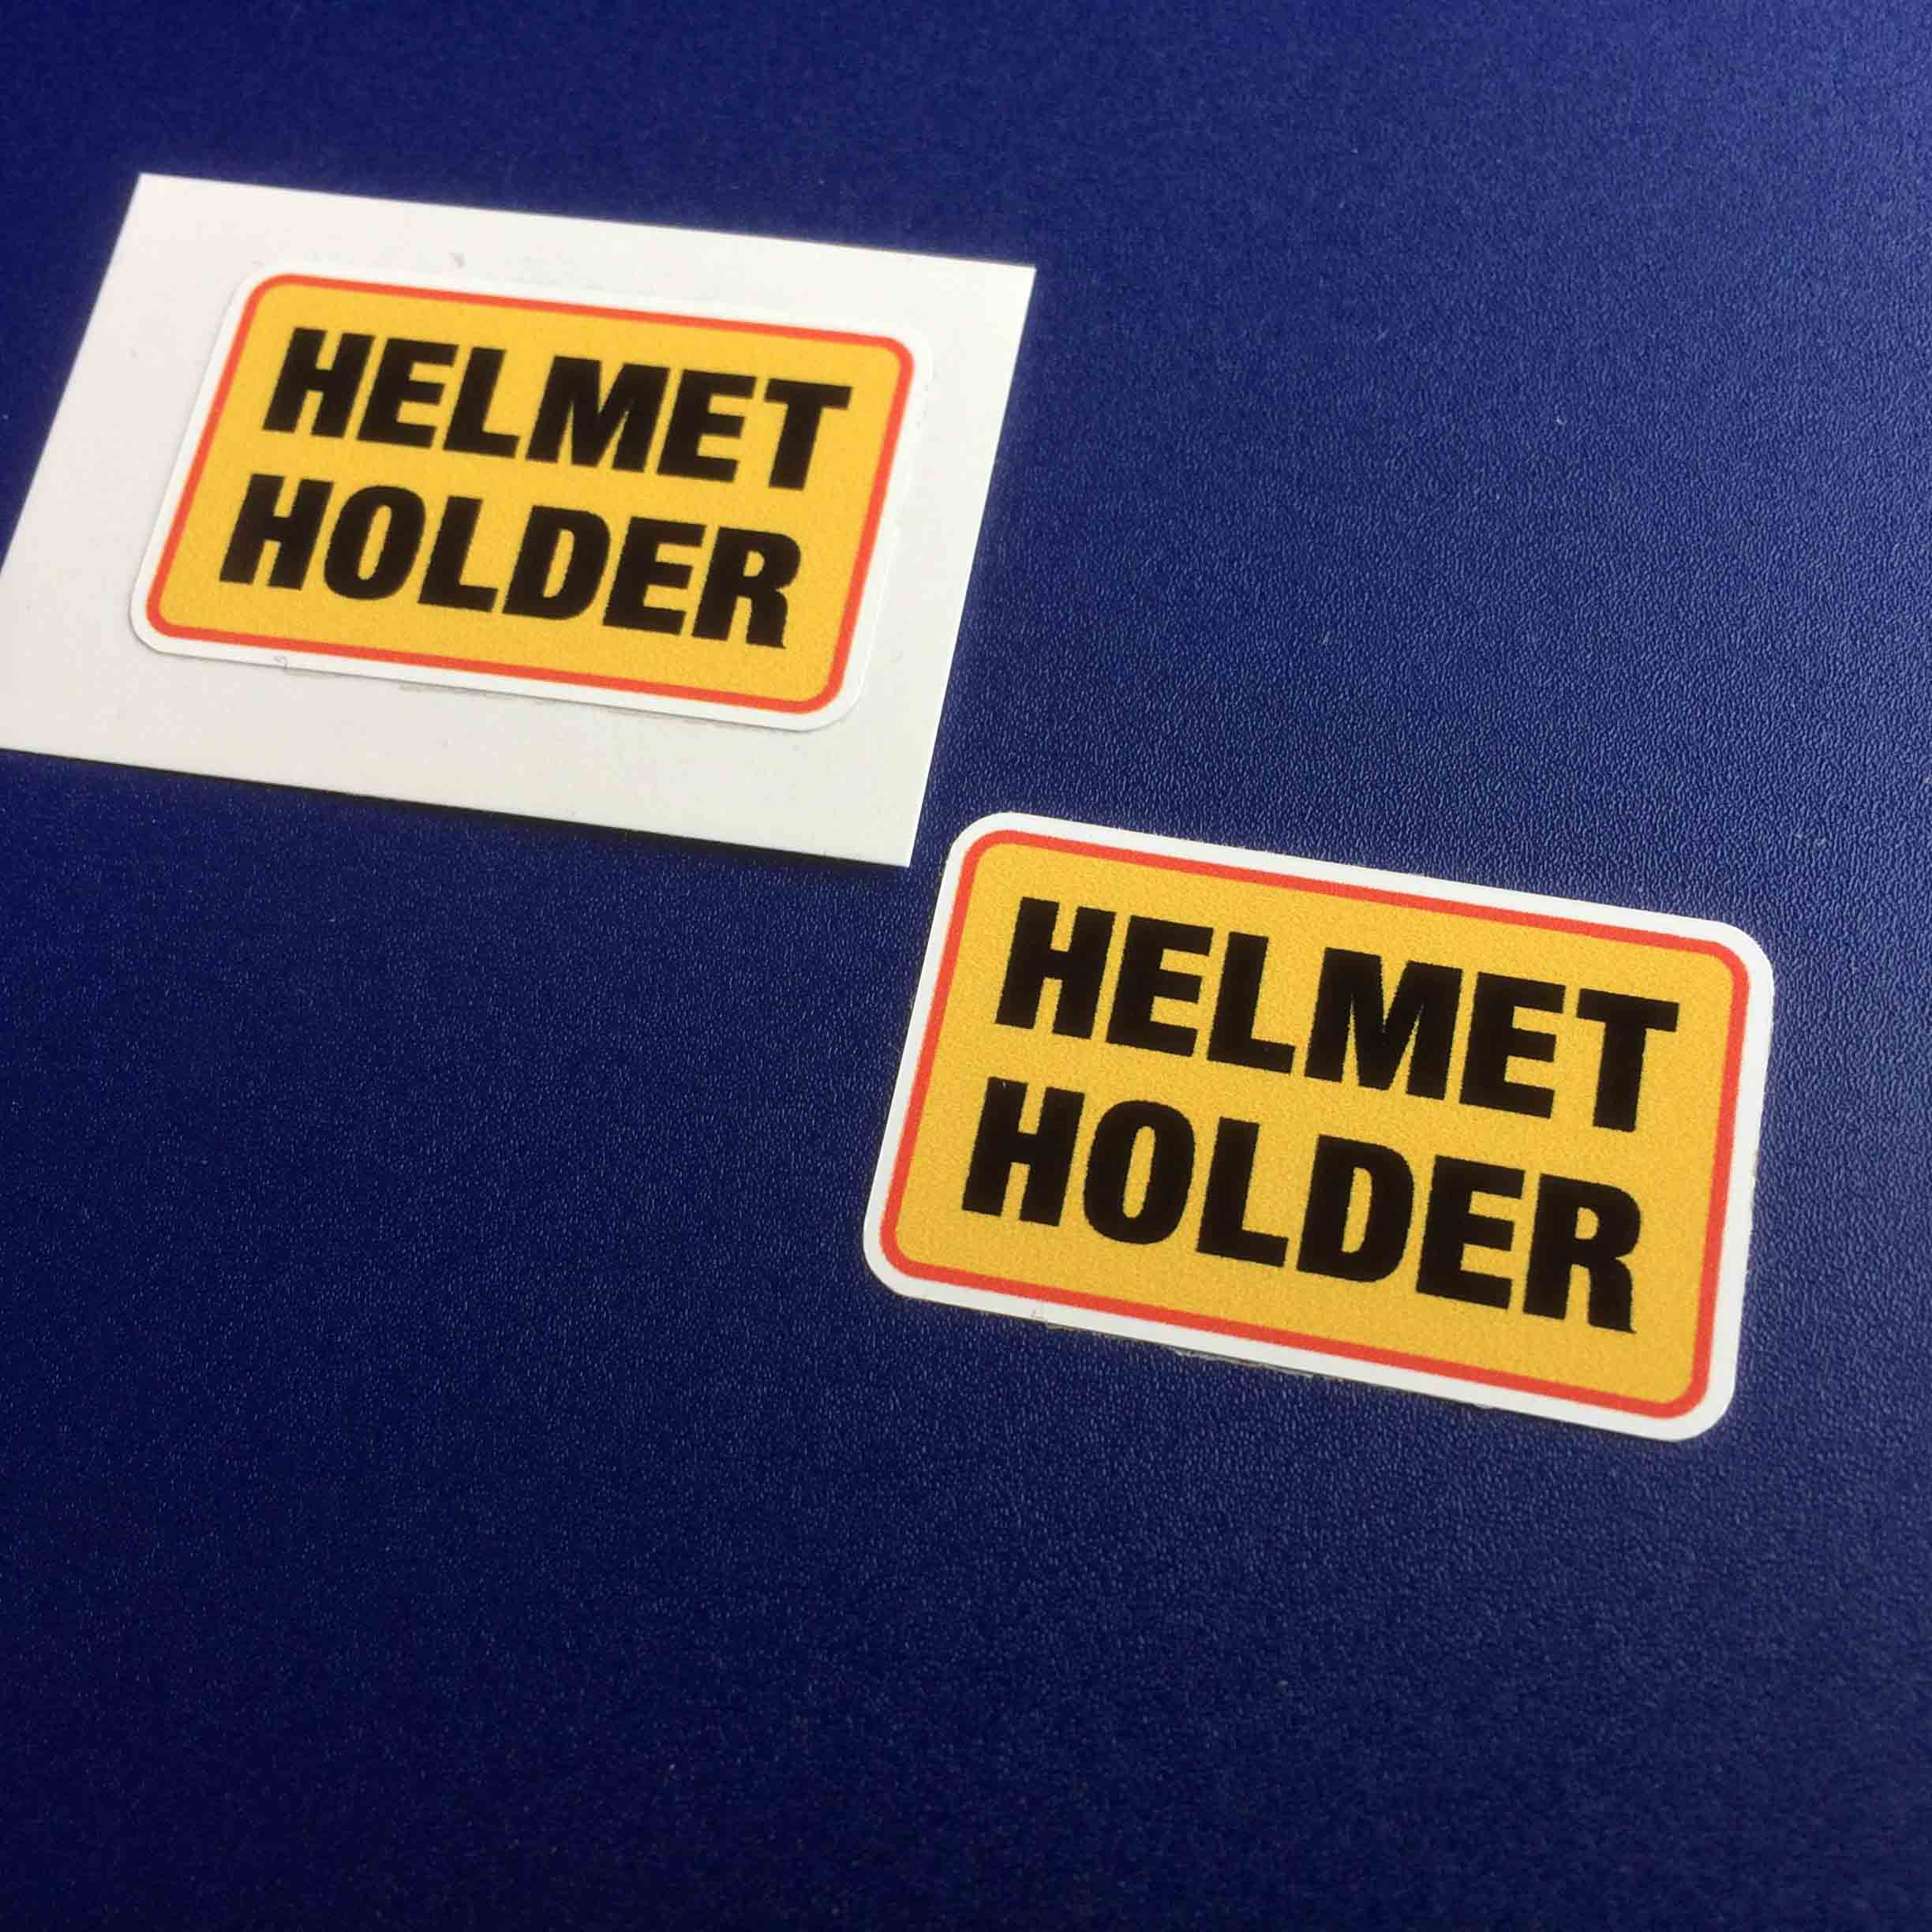 HELMET HOLDER STICKERS. Helmet Holder in bold black uppercase lettering on a yellow background with an orange border.